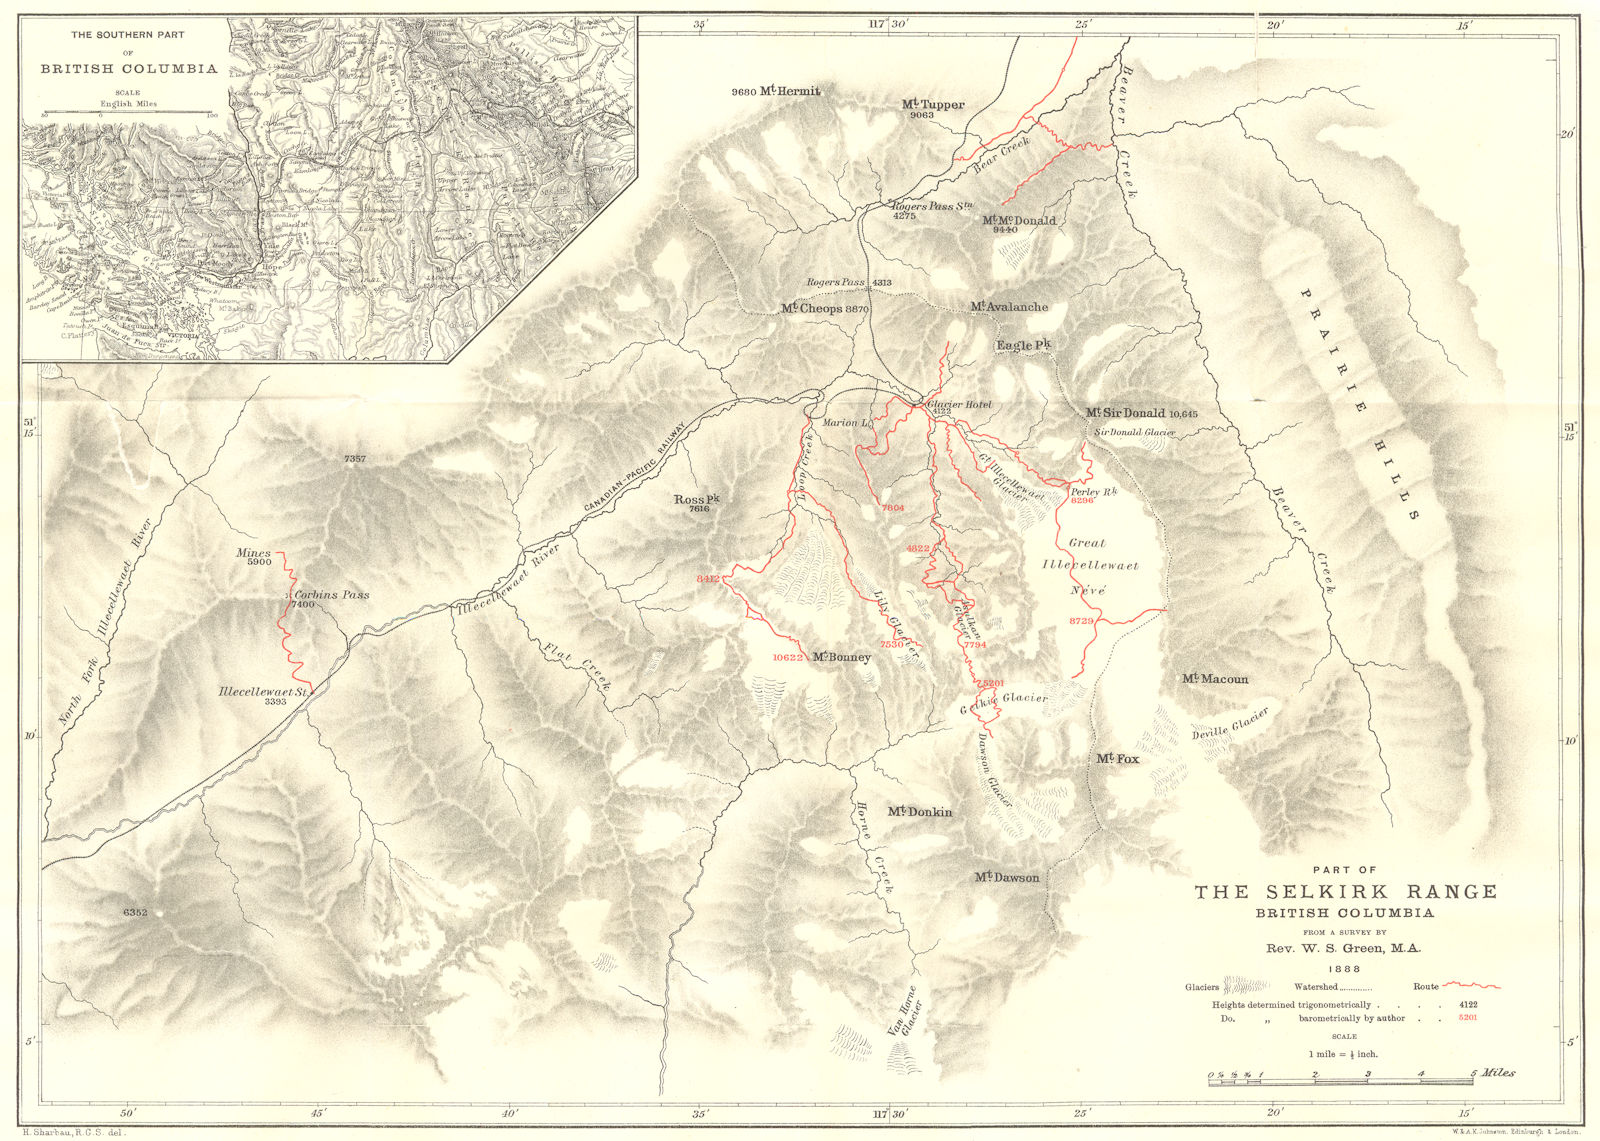 BRITISH COLUMBIA. Part of the Selkirk Range. Rev. Green survey. RGS 1889 map